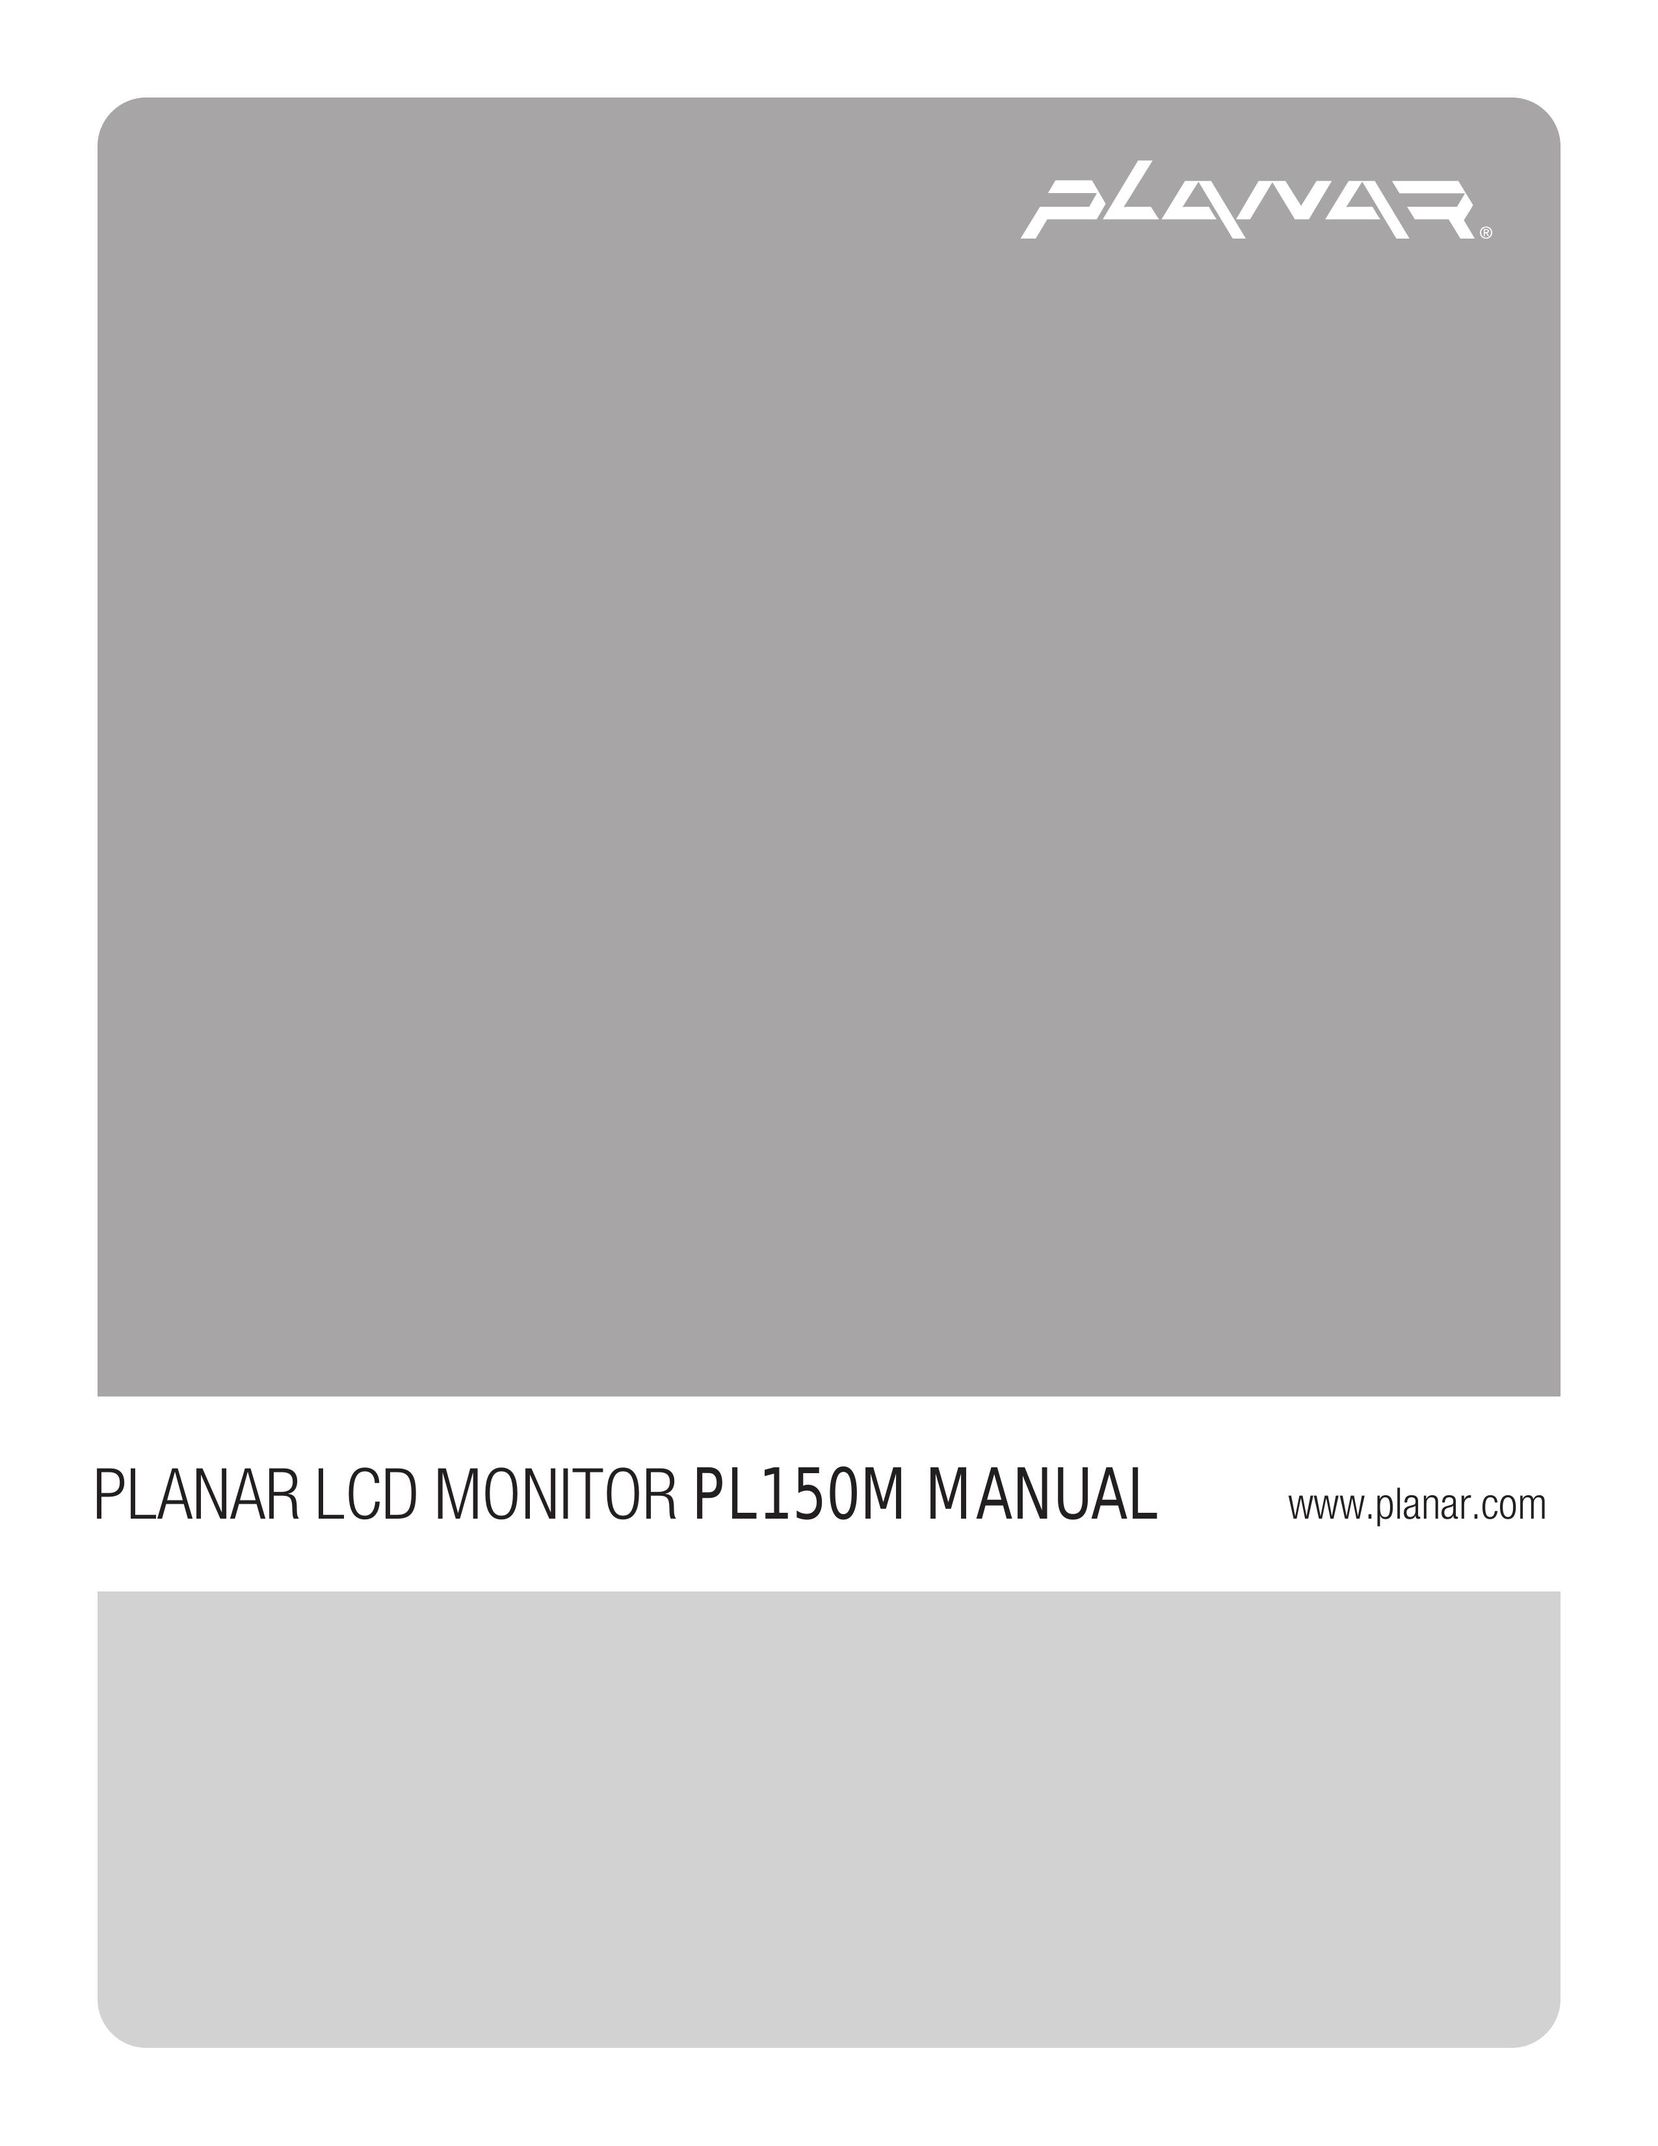 Planar pl150m Car Video System User Manual